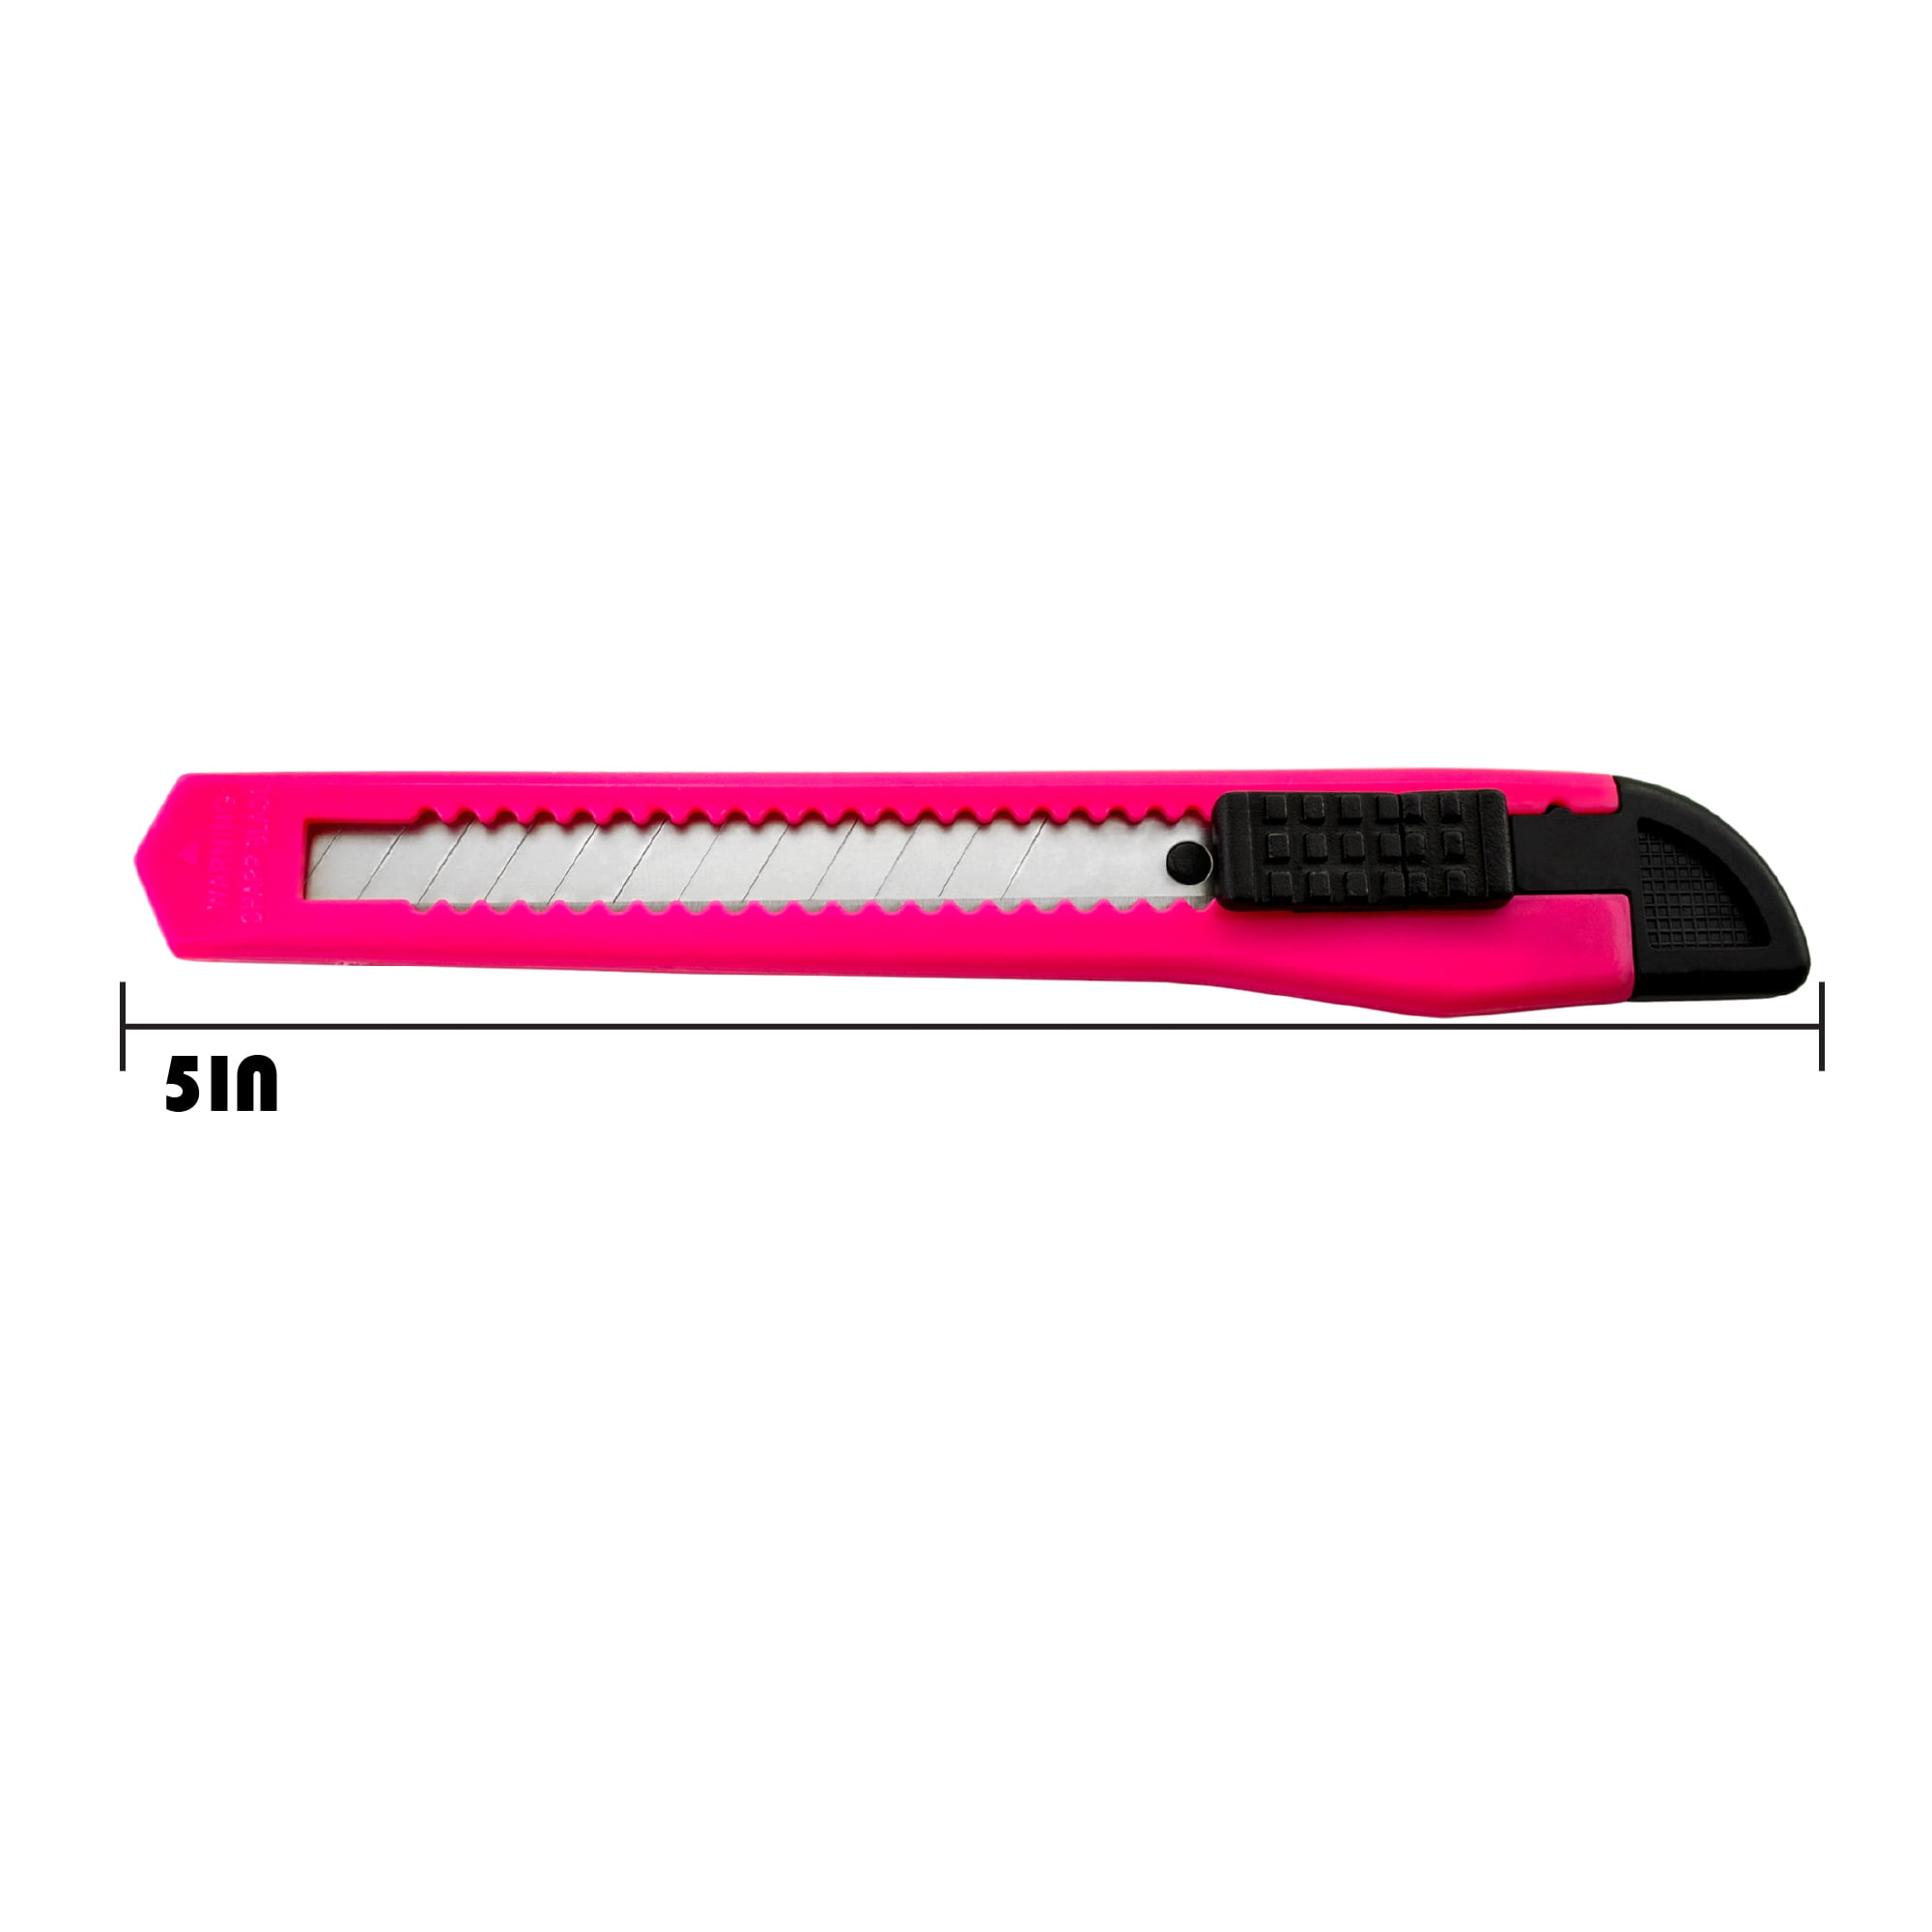 3 Neon Pink Box Cutters Utility Knifes Heavy Duty Industrial